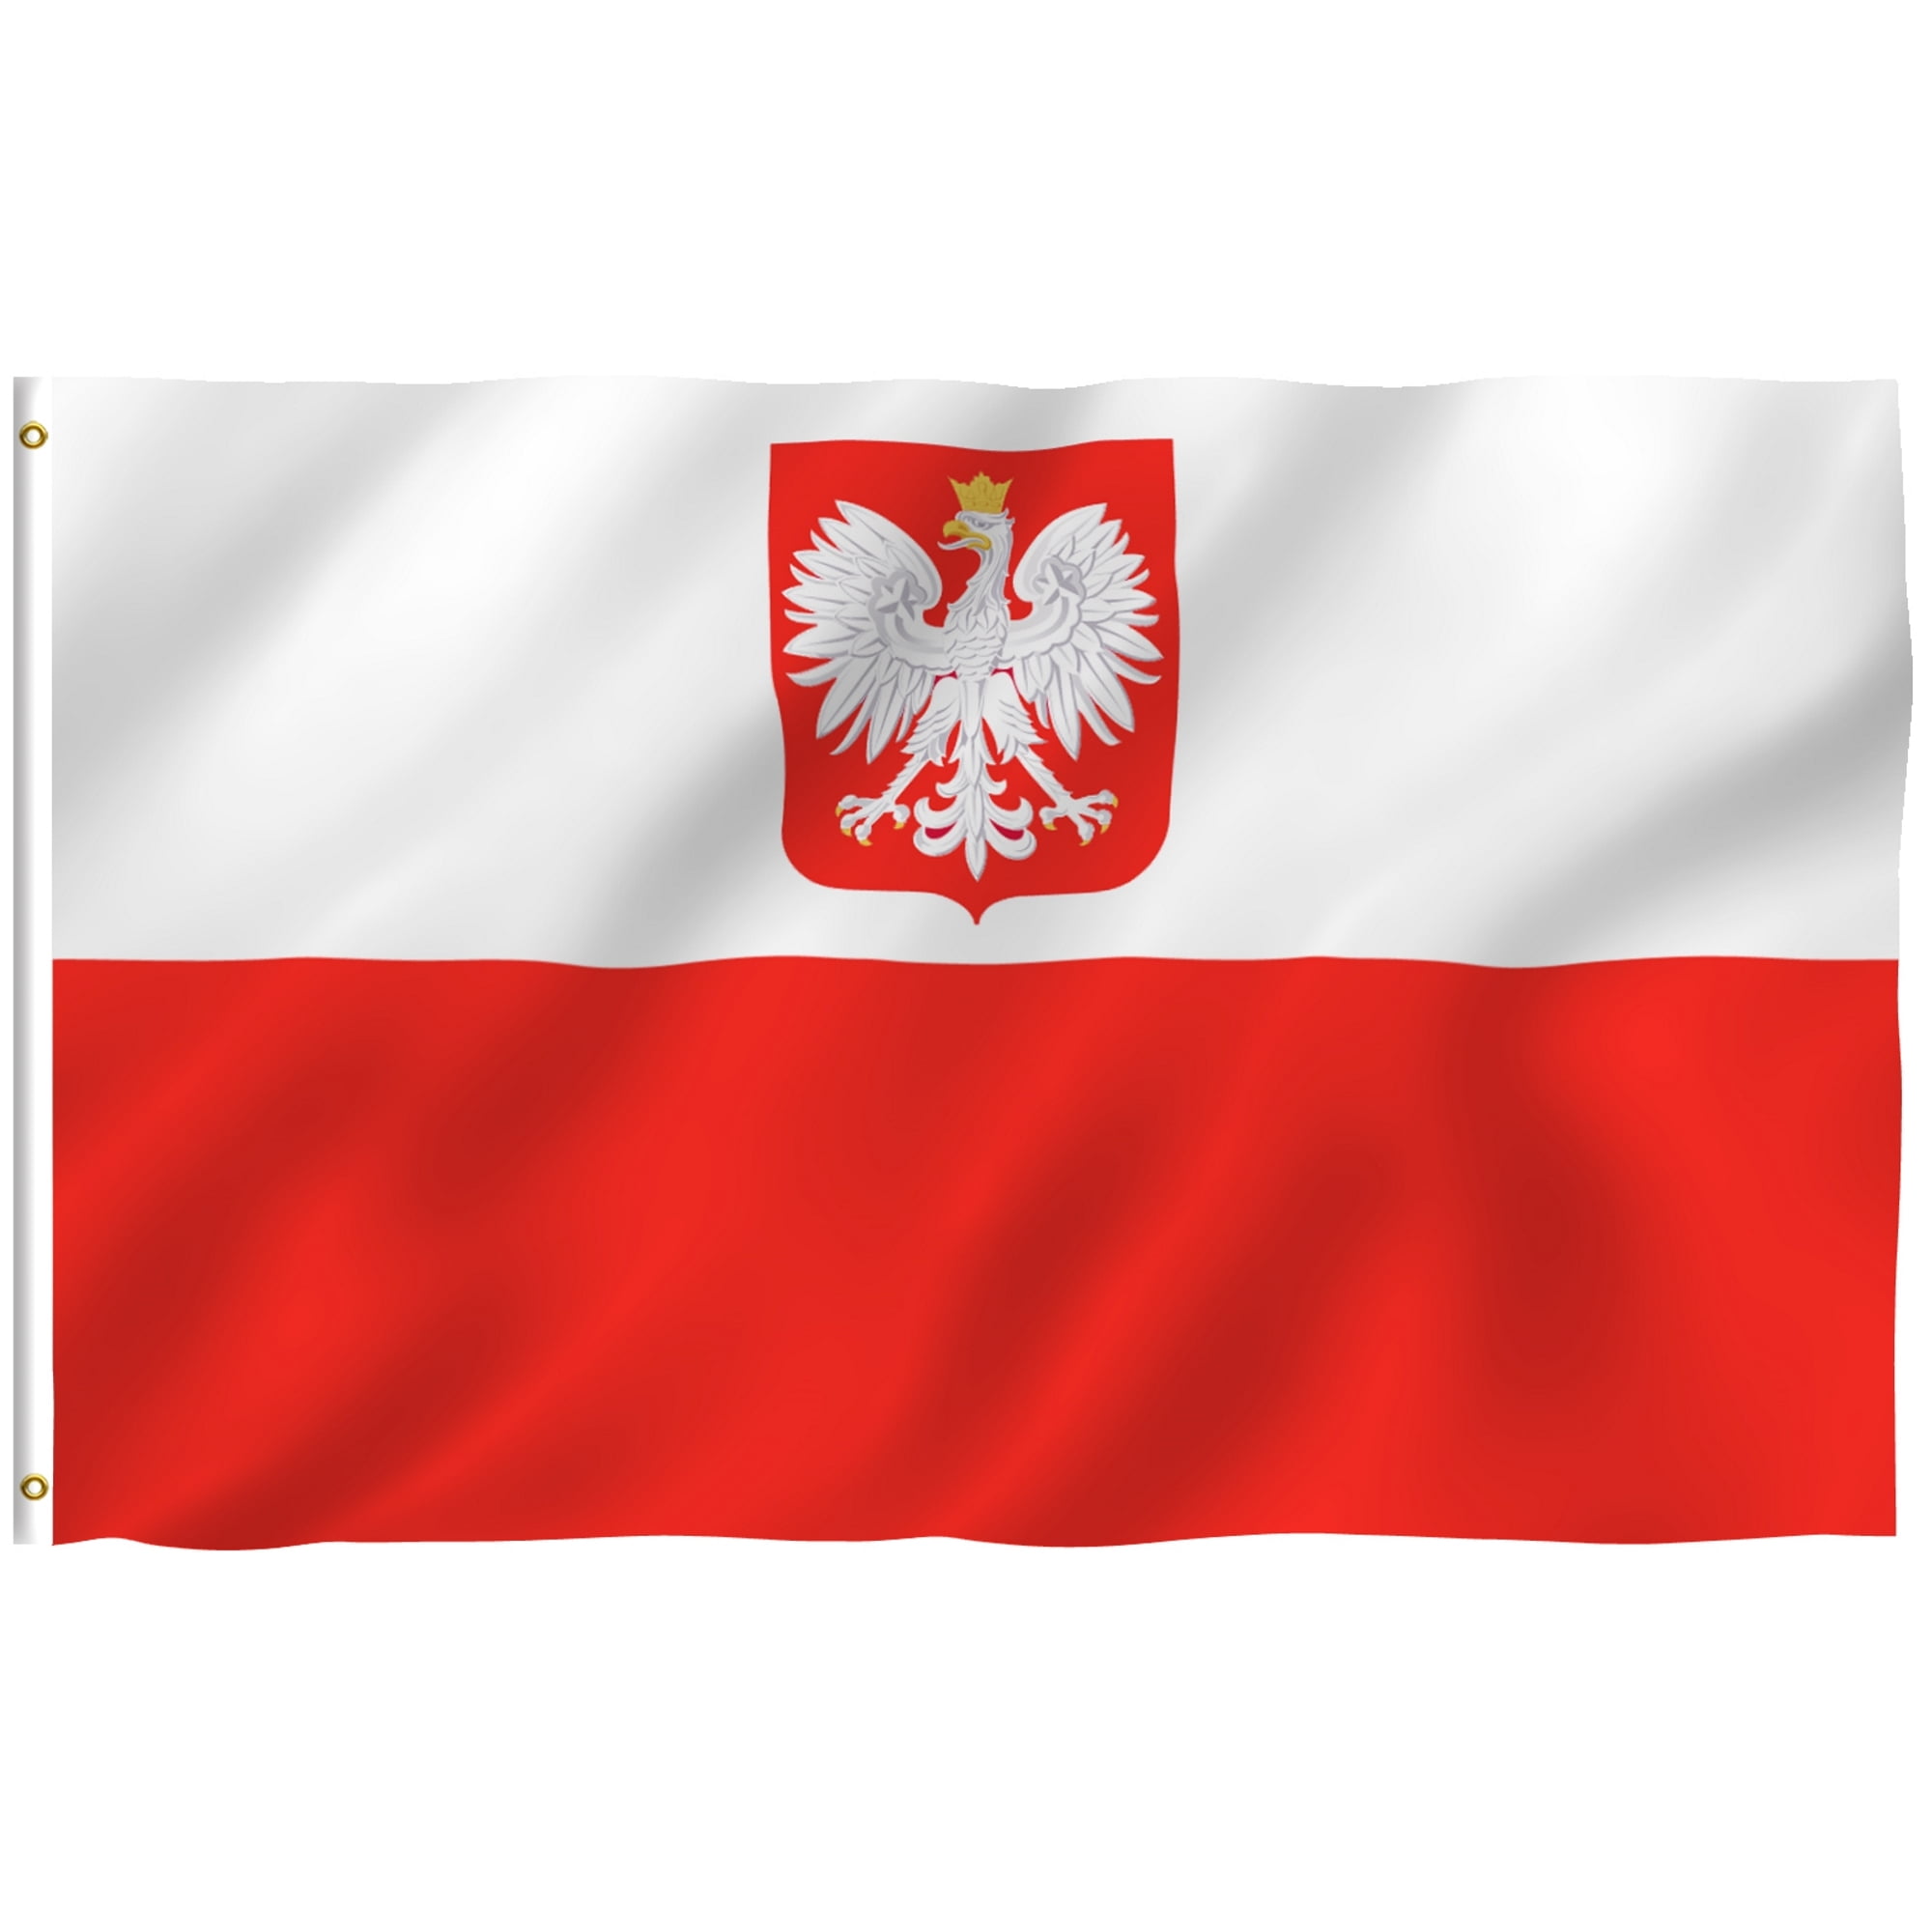 NEW POLSKA POLAND COUNTRY FLAG WITH EAGLE  MINI BOXING GLOVES . 